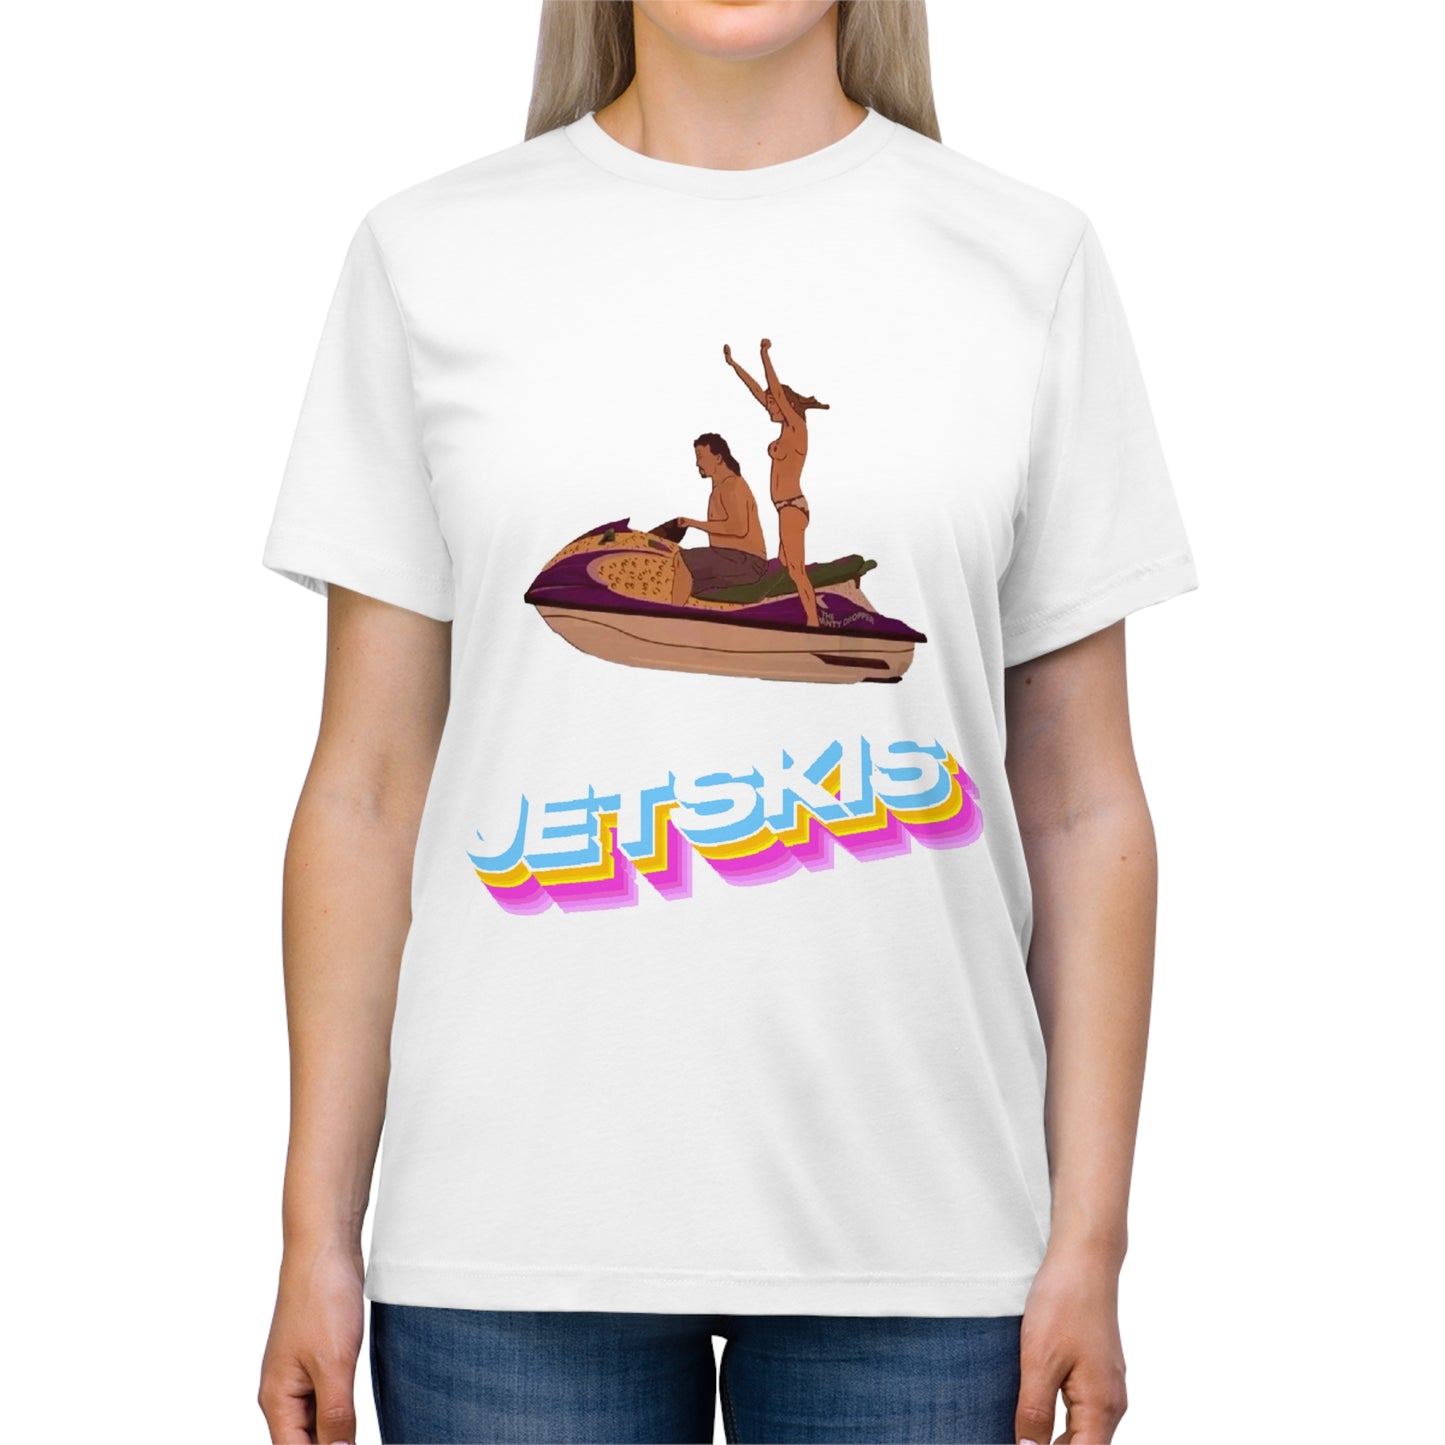 Jet Skis - T-Shirt